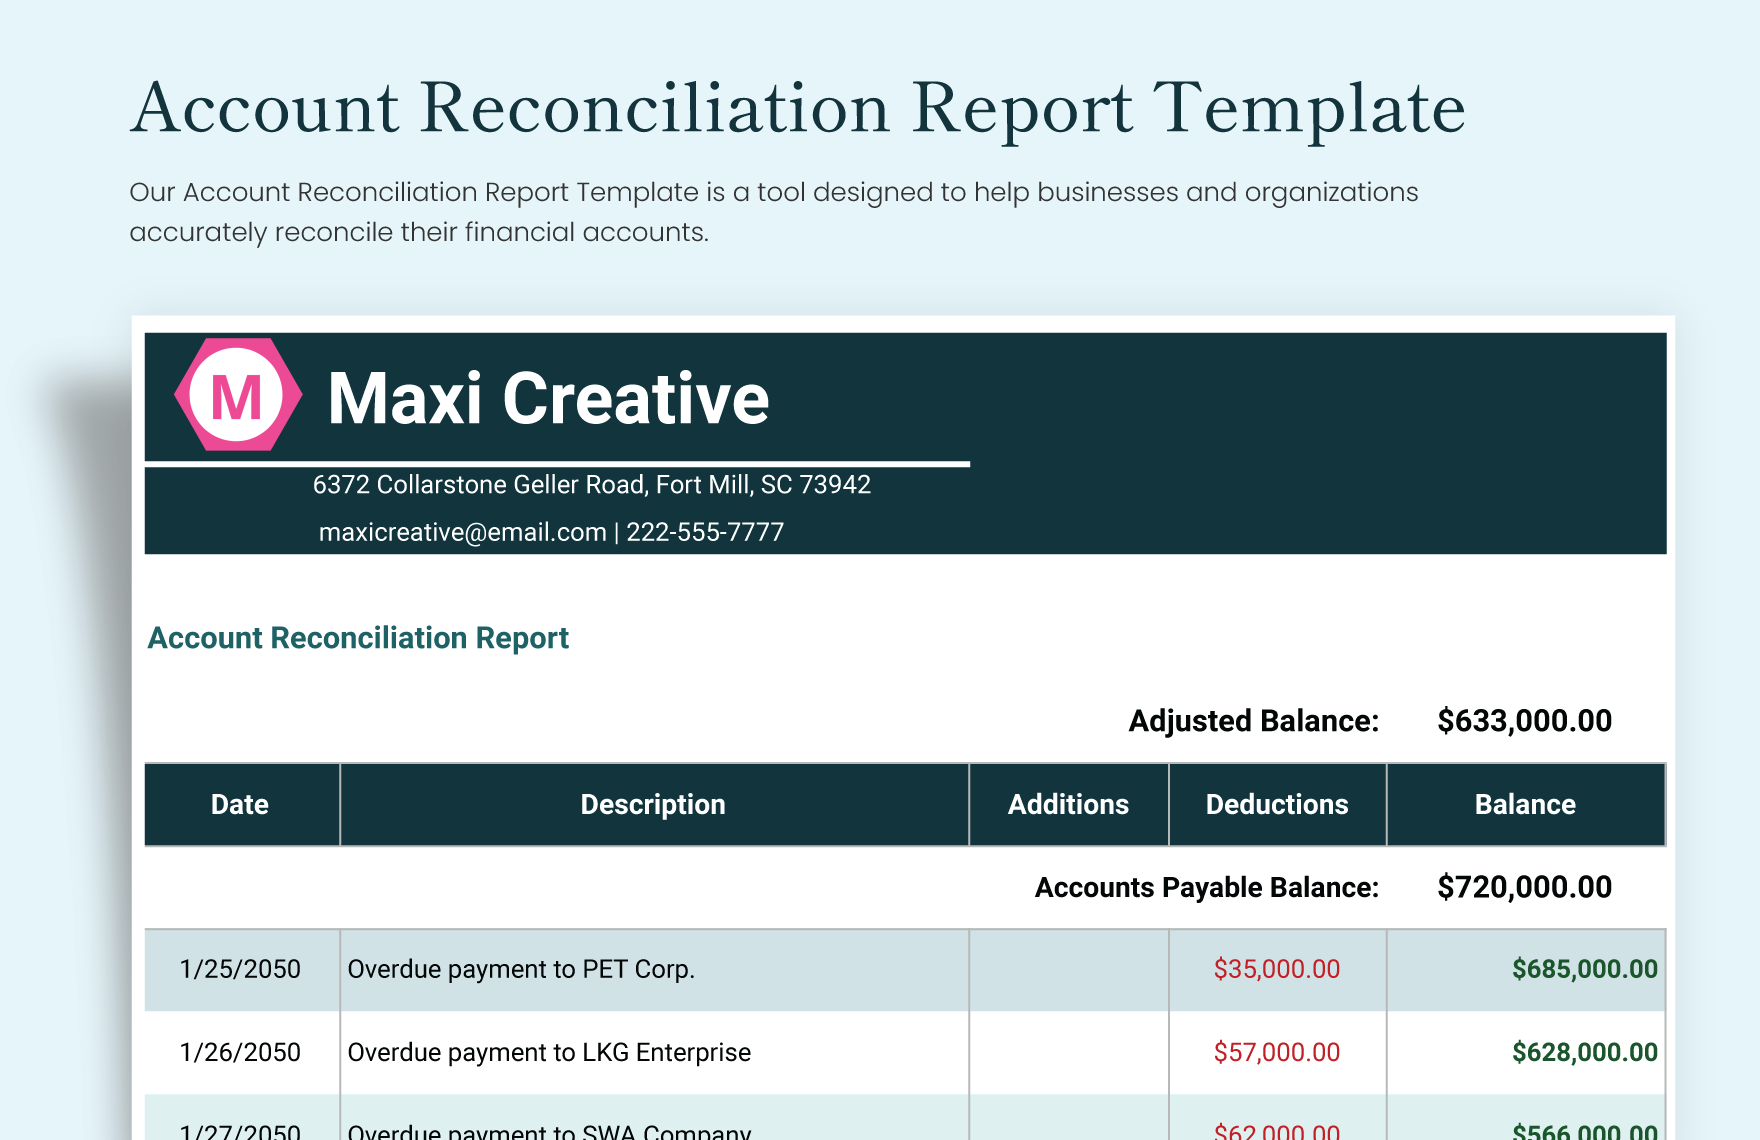 Account Reconciliation Report Template